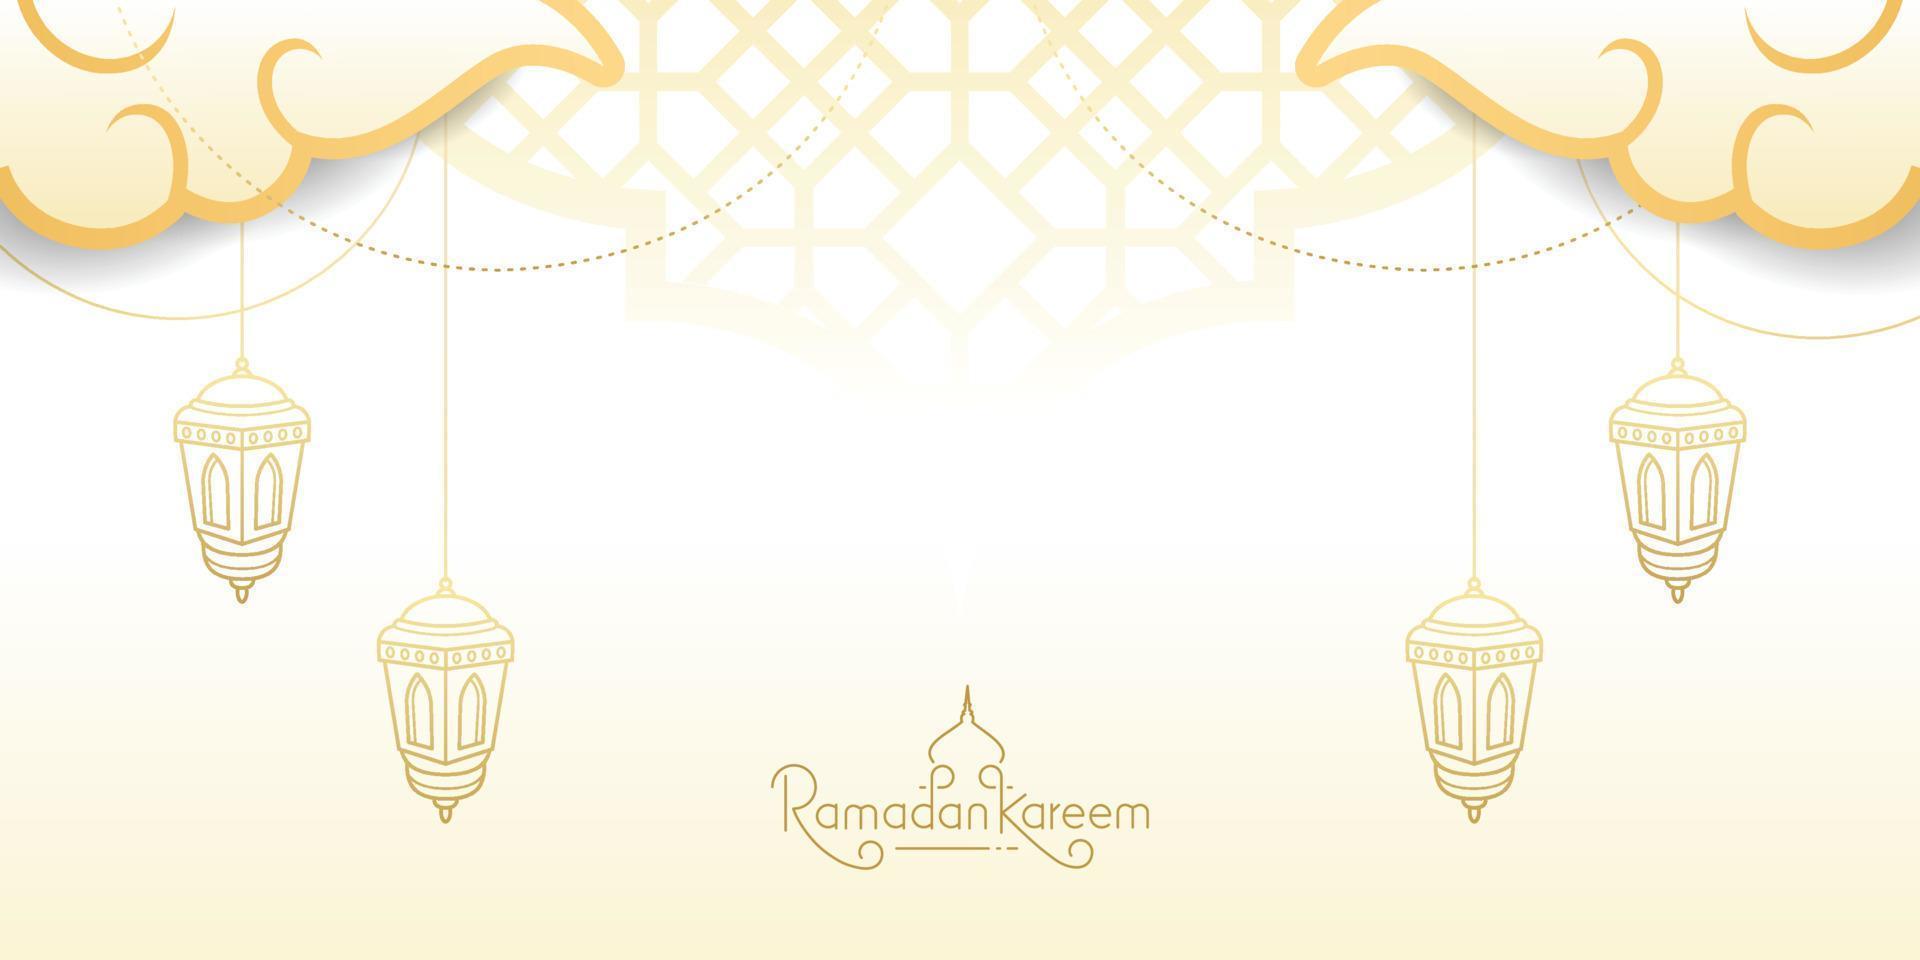 Ramadan kareem golden banner with lantern line art vector illustration